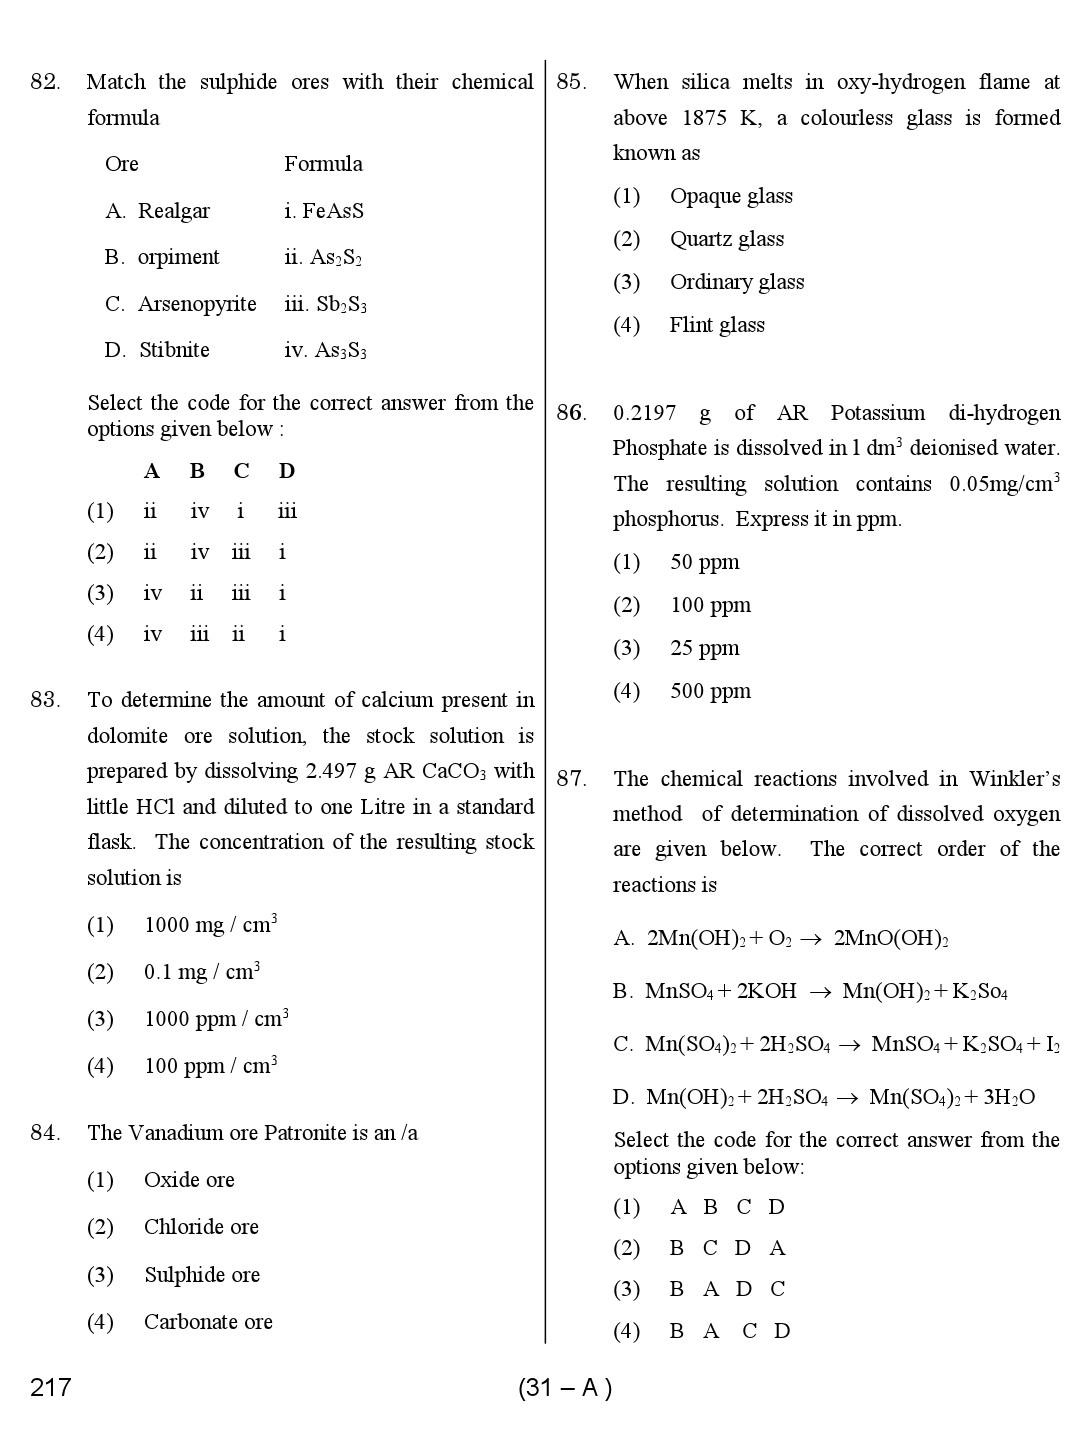 Karnataka PSC Chemist Exam Sample Question Paper 31